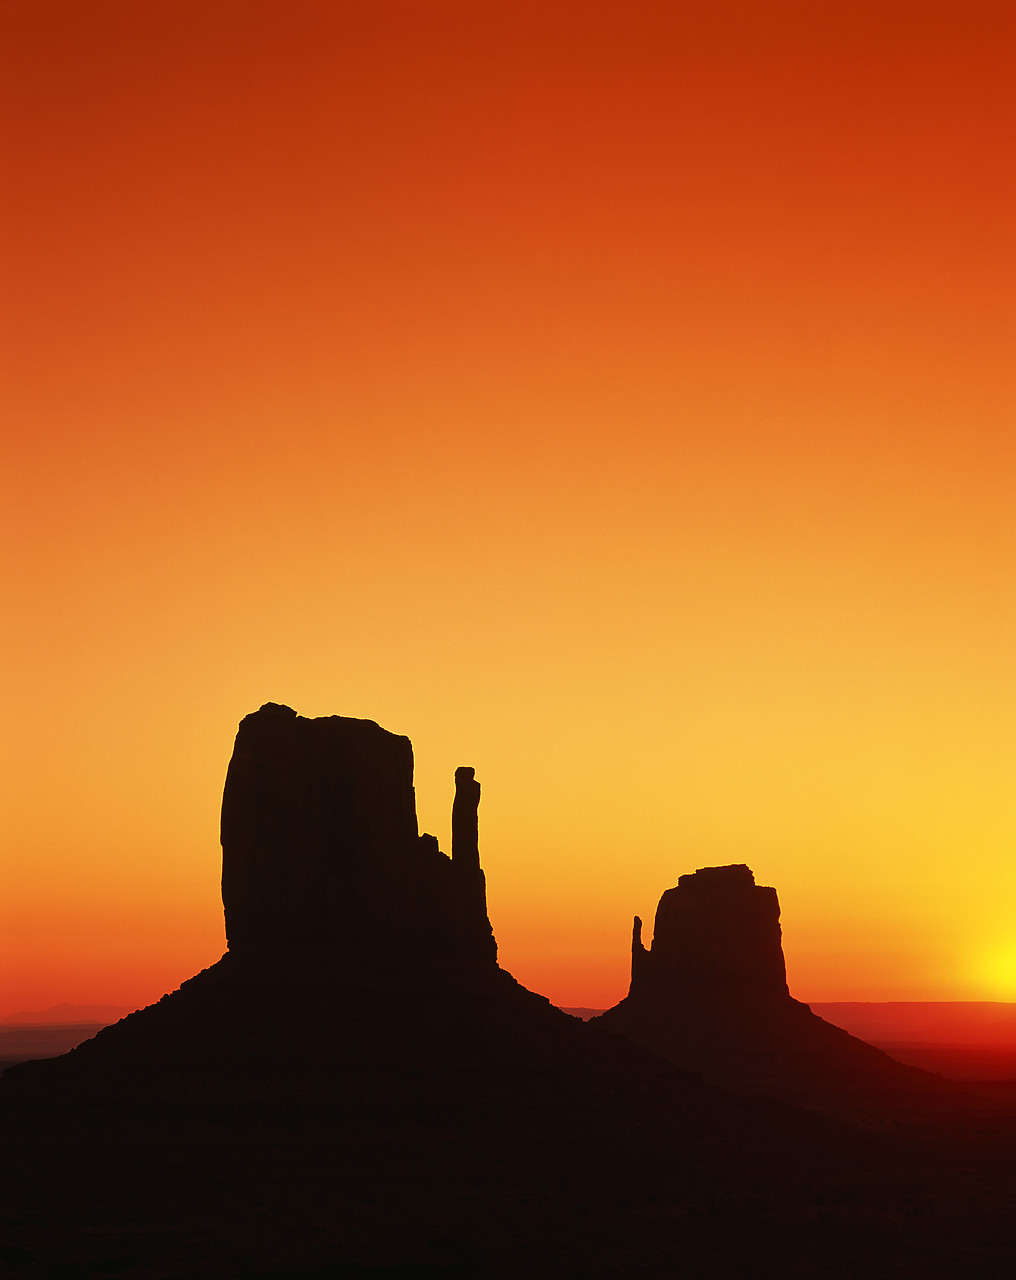 #990607-5 - The Mittens at Sunrise, Monument Valley, Arizona, USA